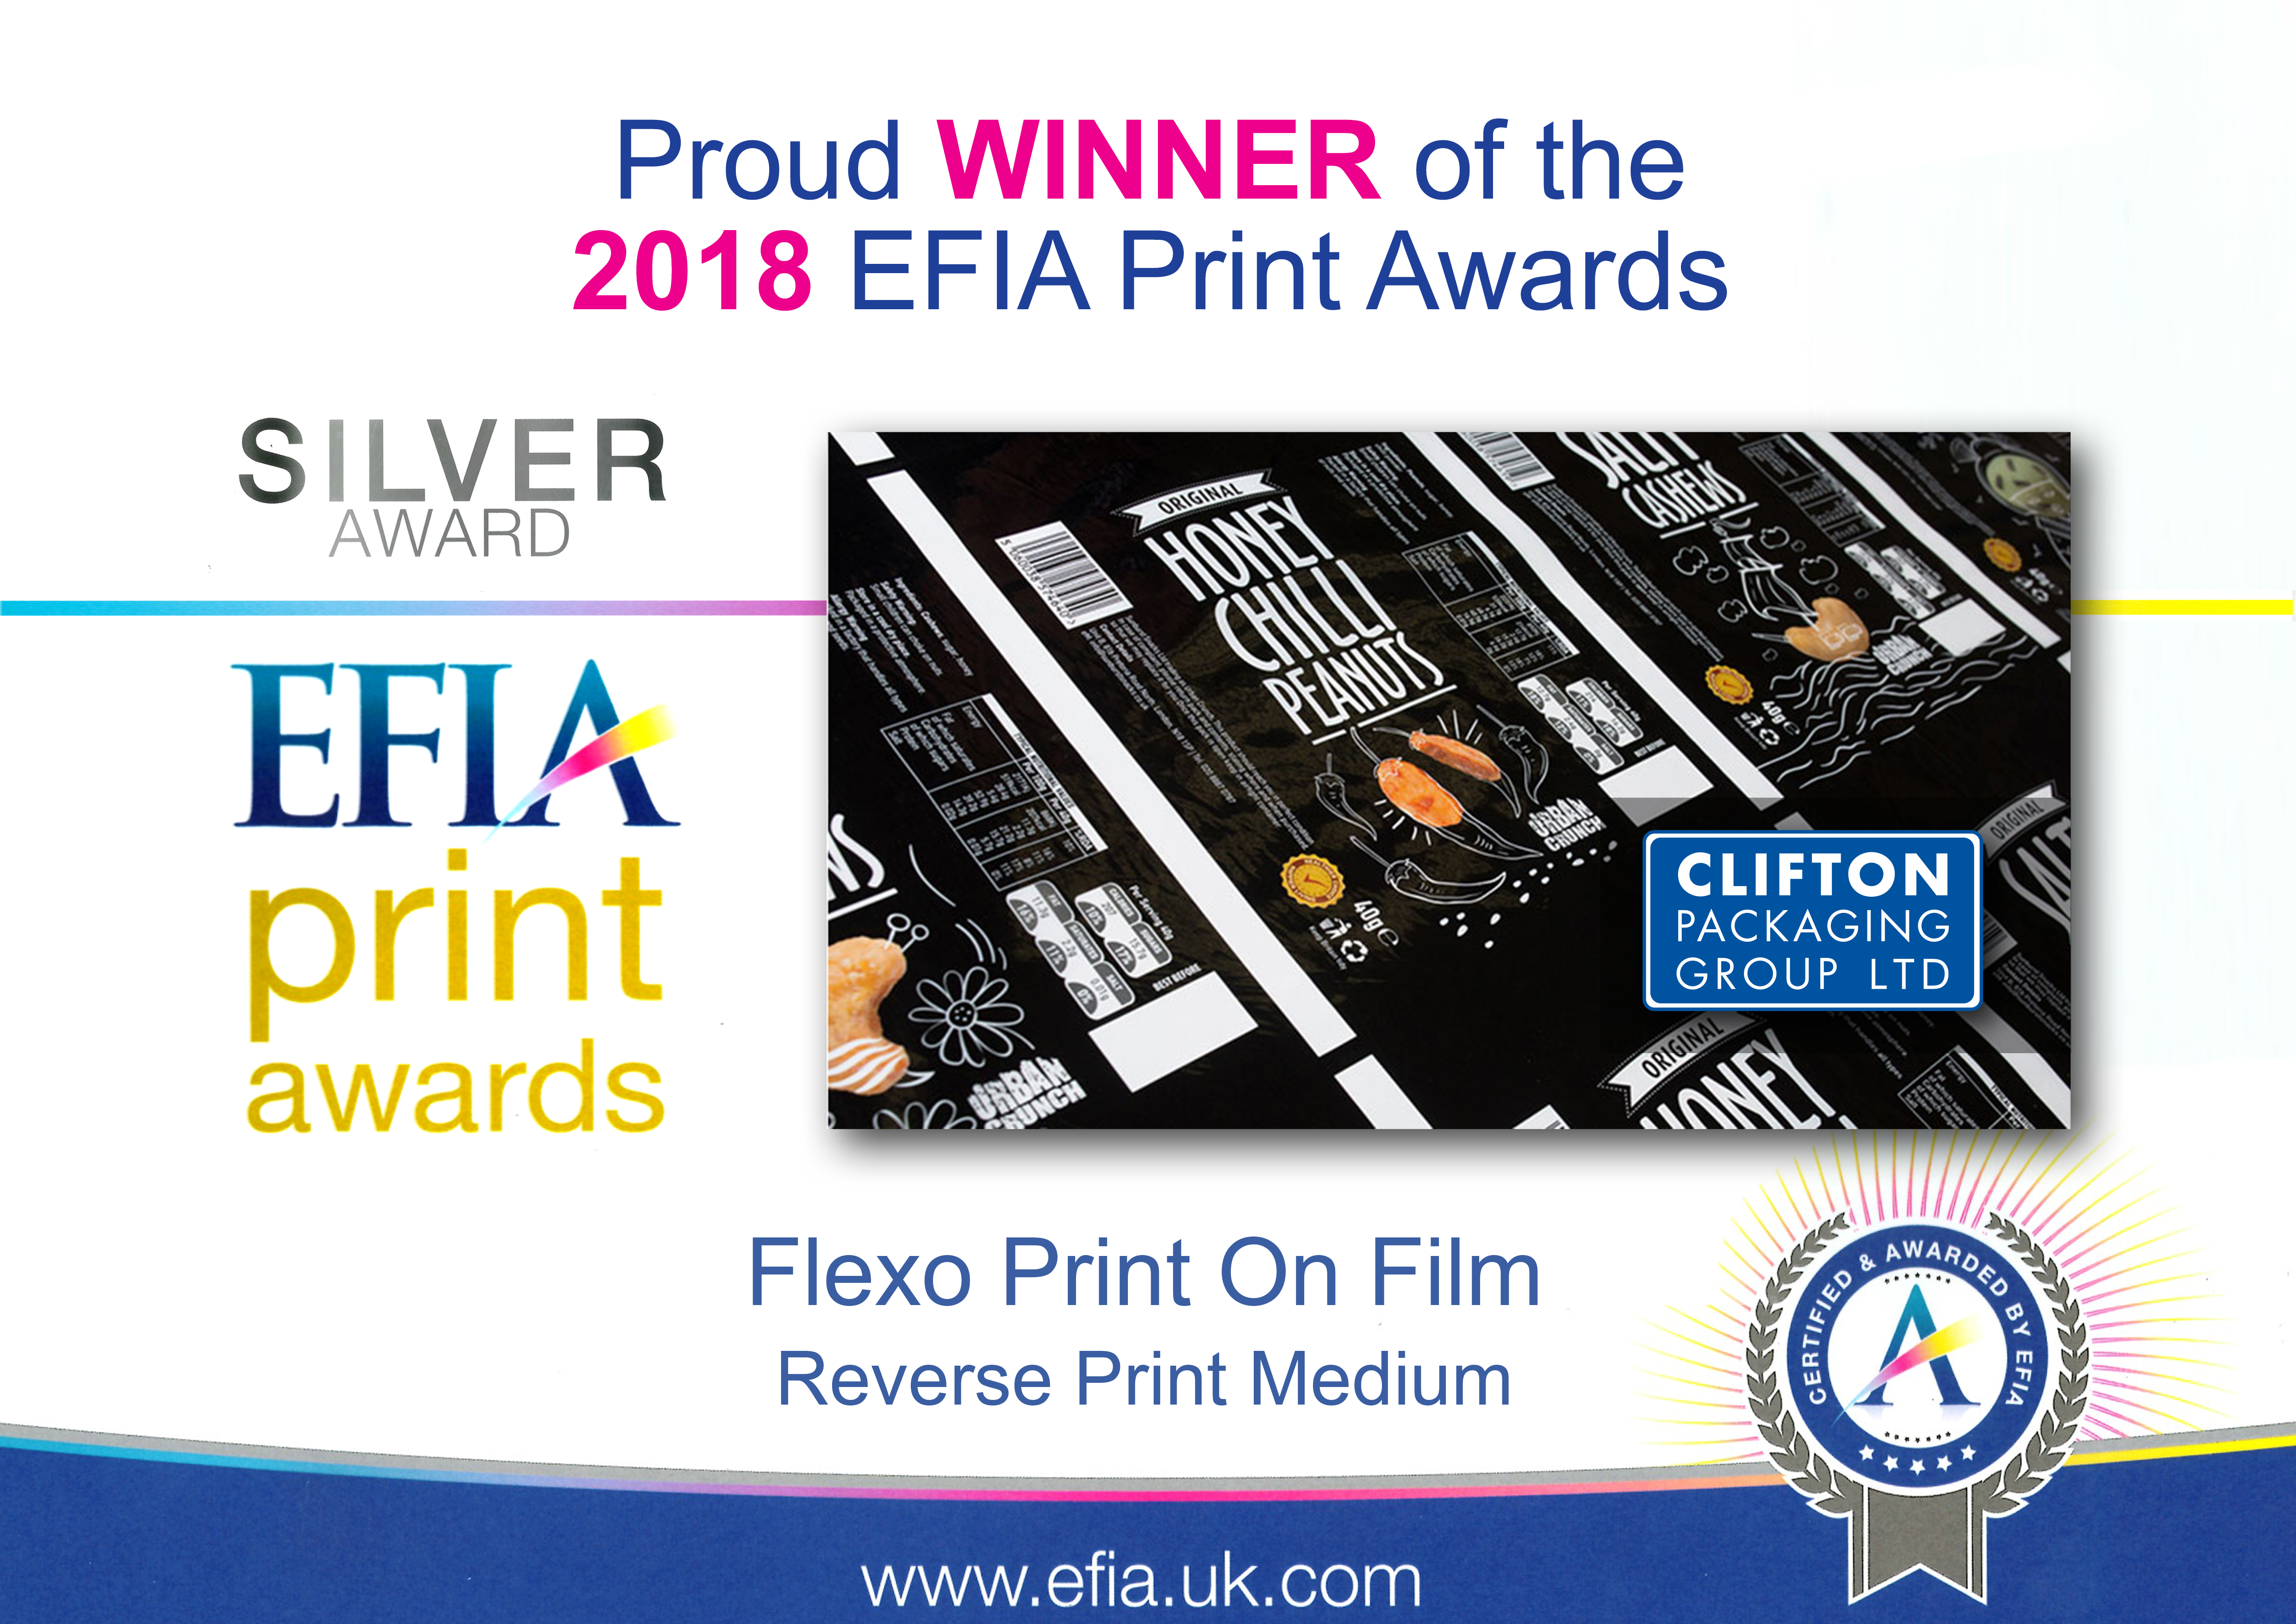 EFIA Print Awards 2018 - Silver Award